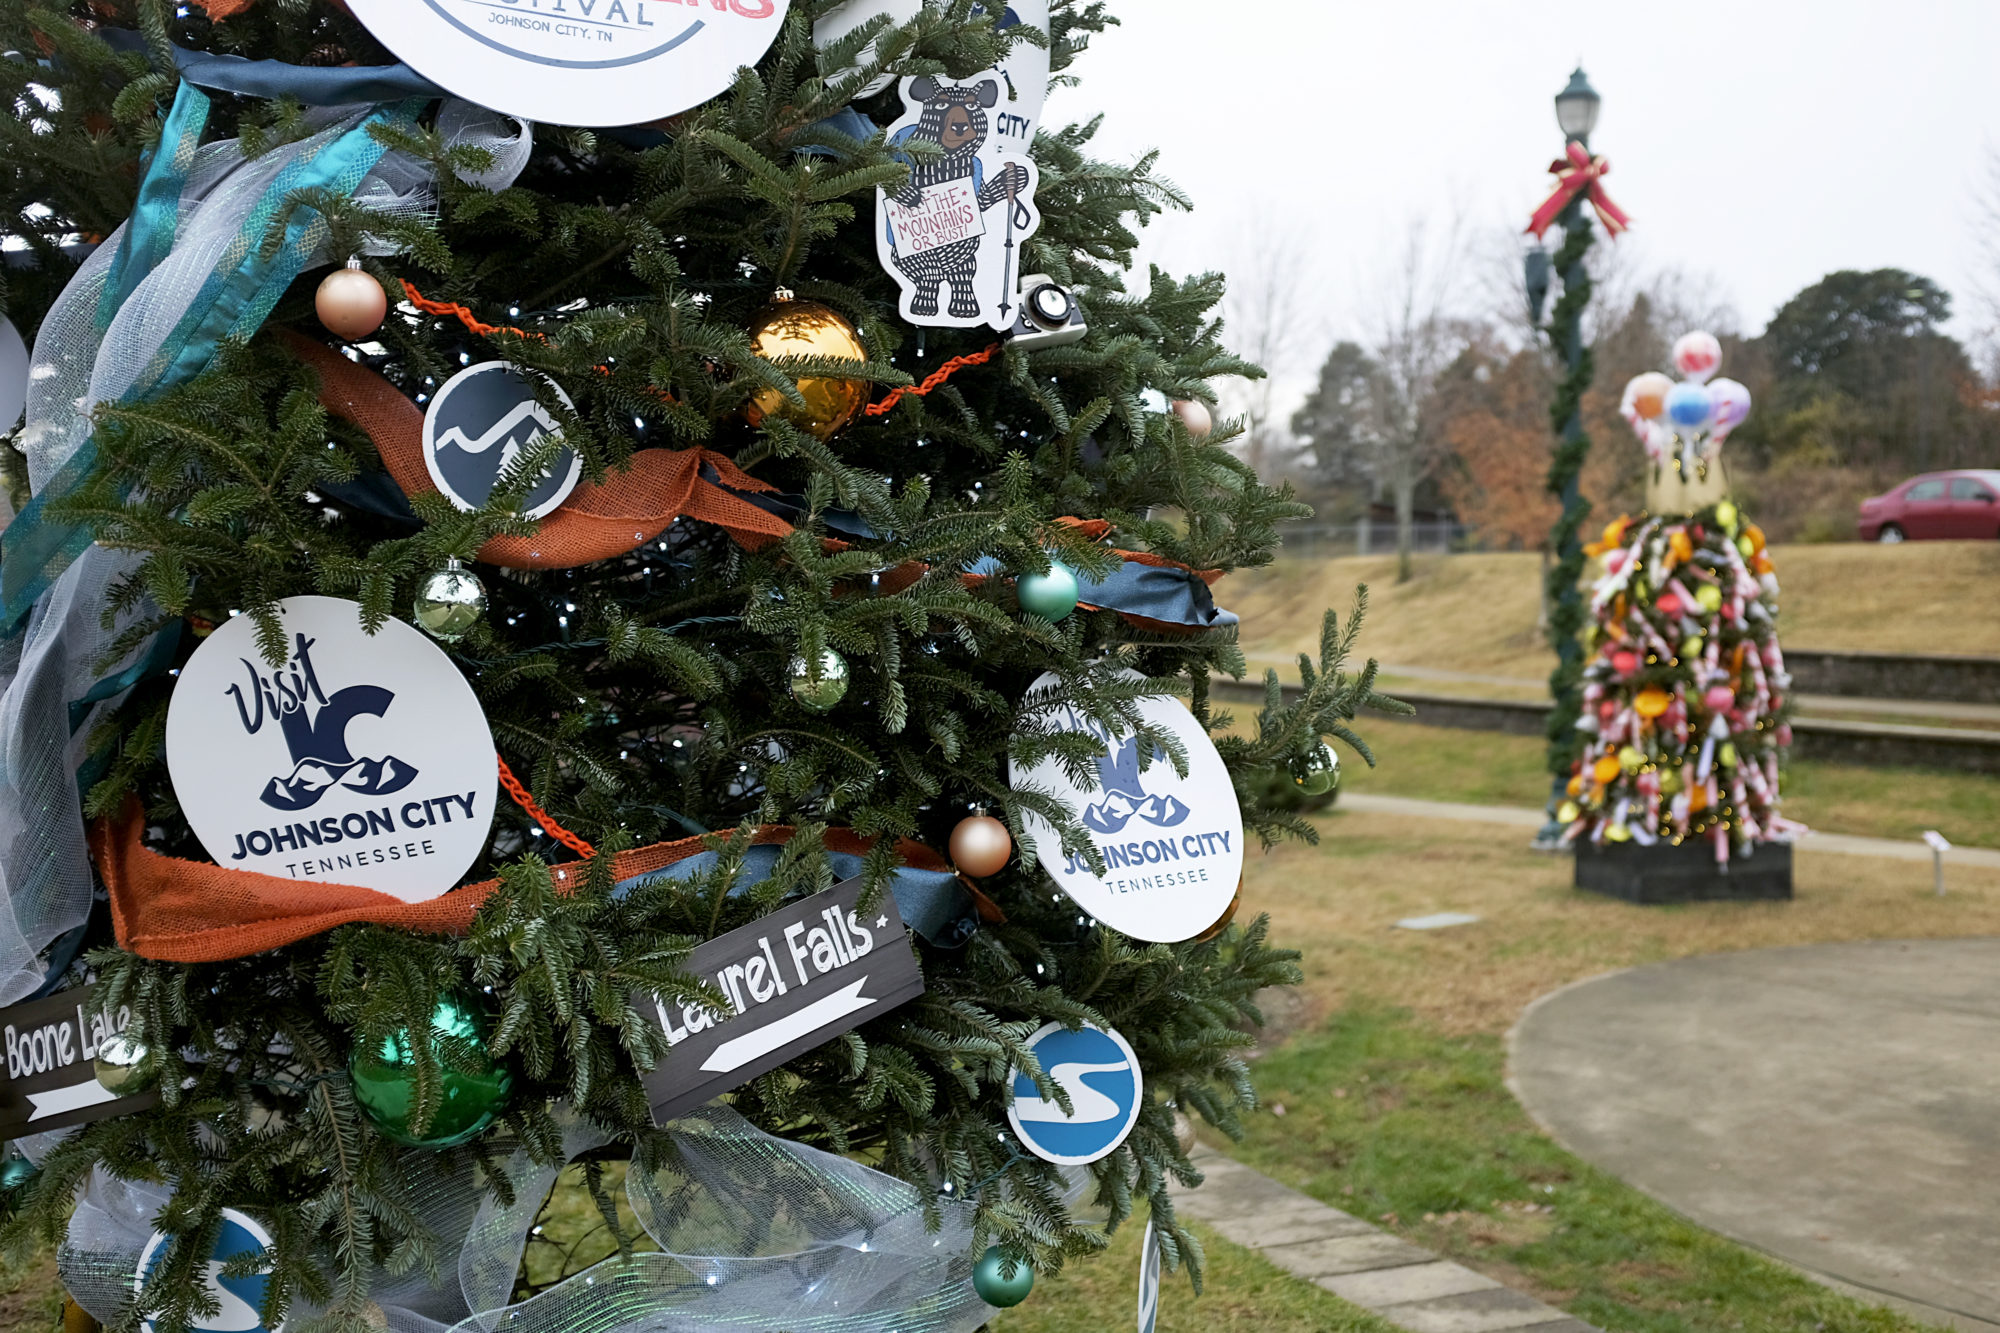 the Visit Johnson City tree at Candy Land Christmas